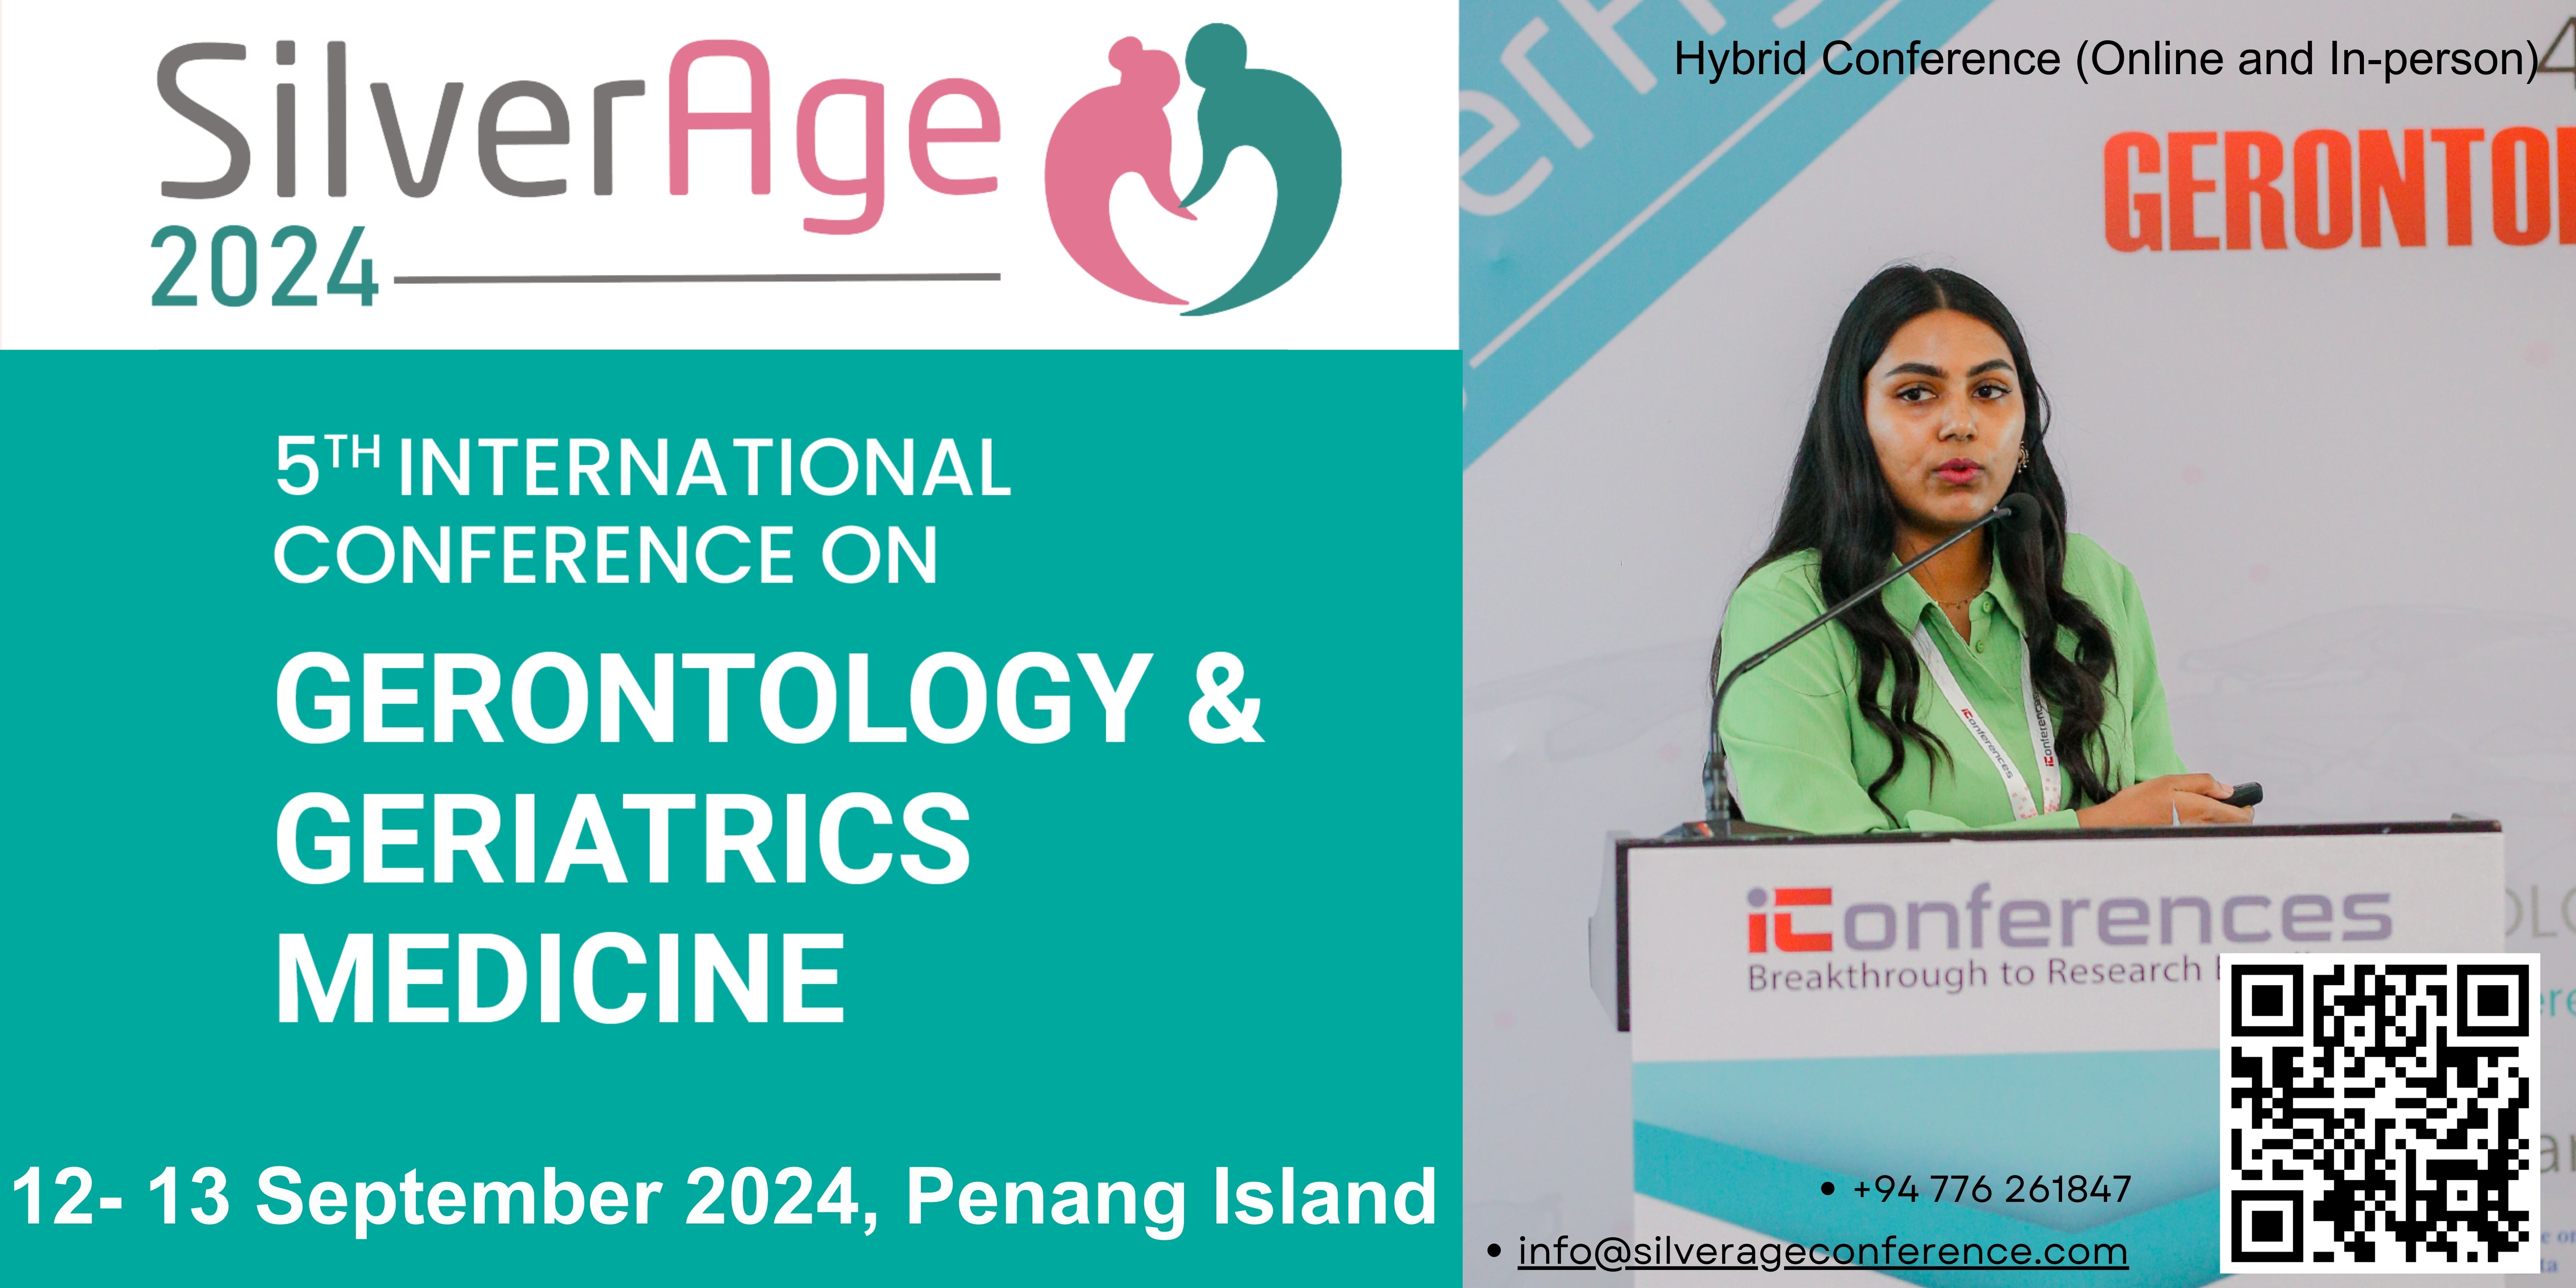 5th International Conference on Gerontology and Geriatrics Medicine, Penang Island, Malaysia